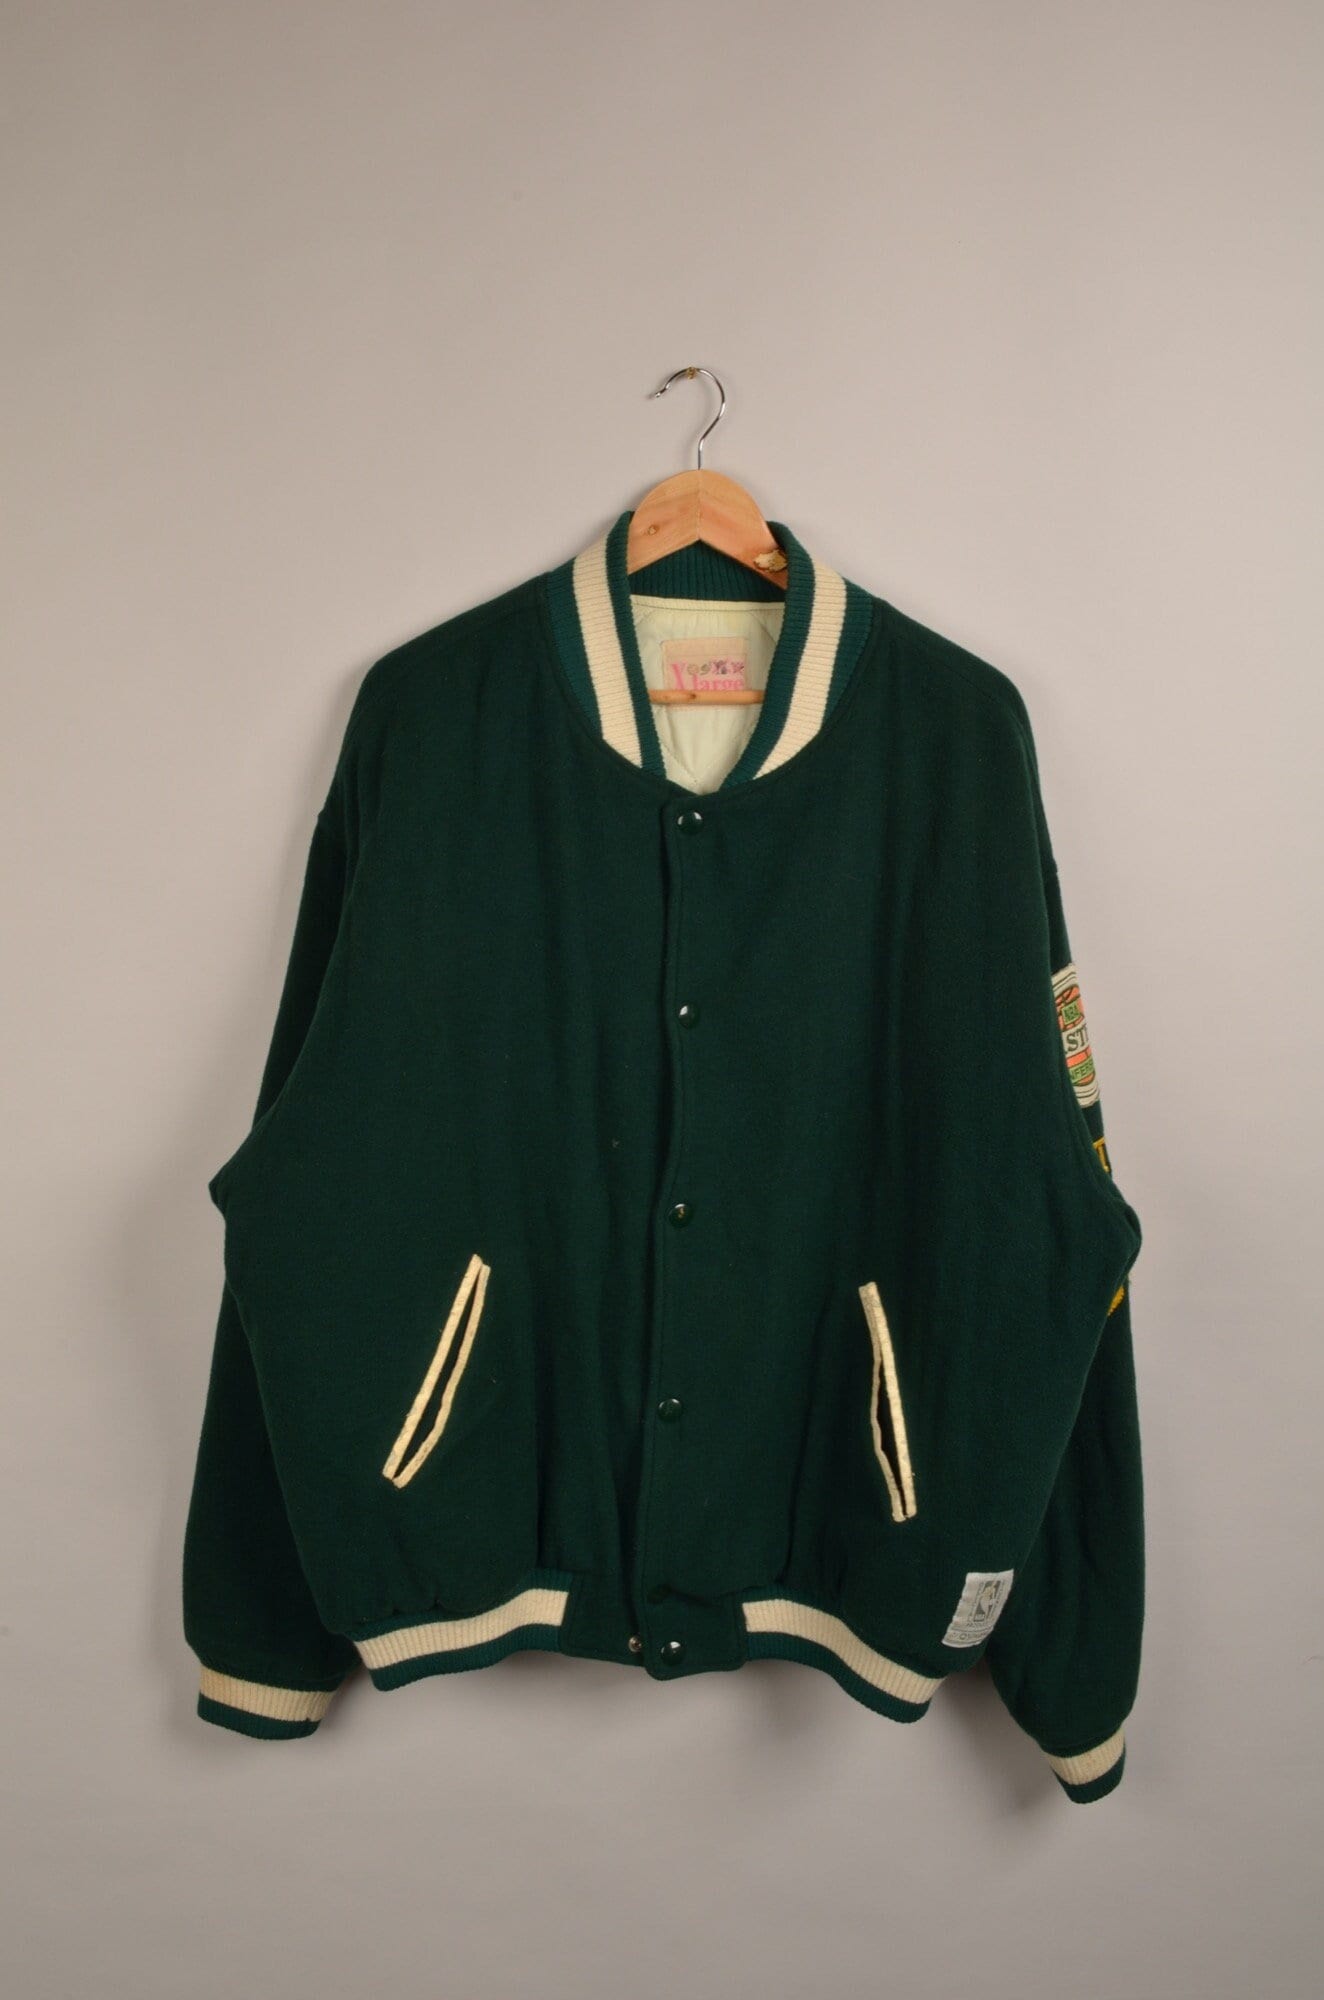 Swingster, Jackets & Coats, Vintage Boston Celtics Jacket Swingster Cream  Green Track Coat Mens Size Medium